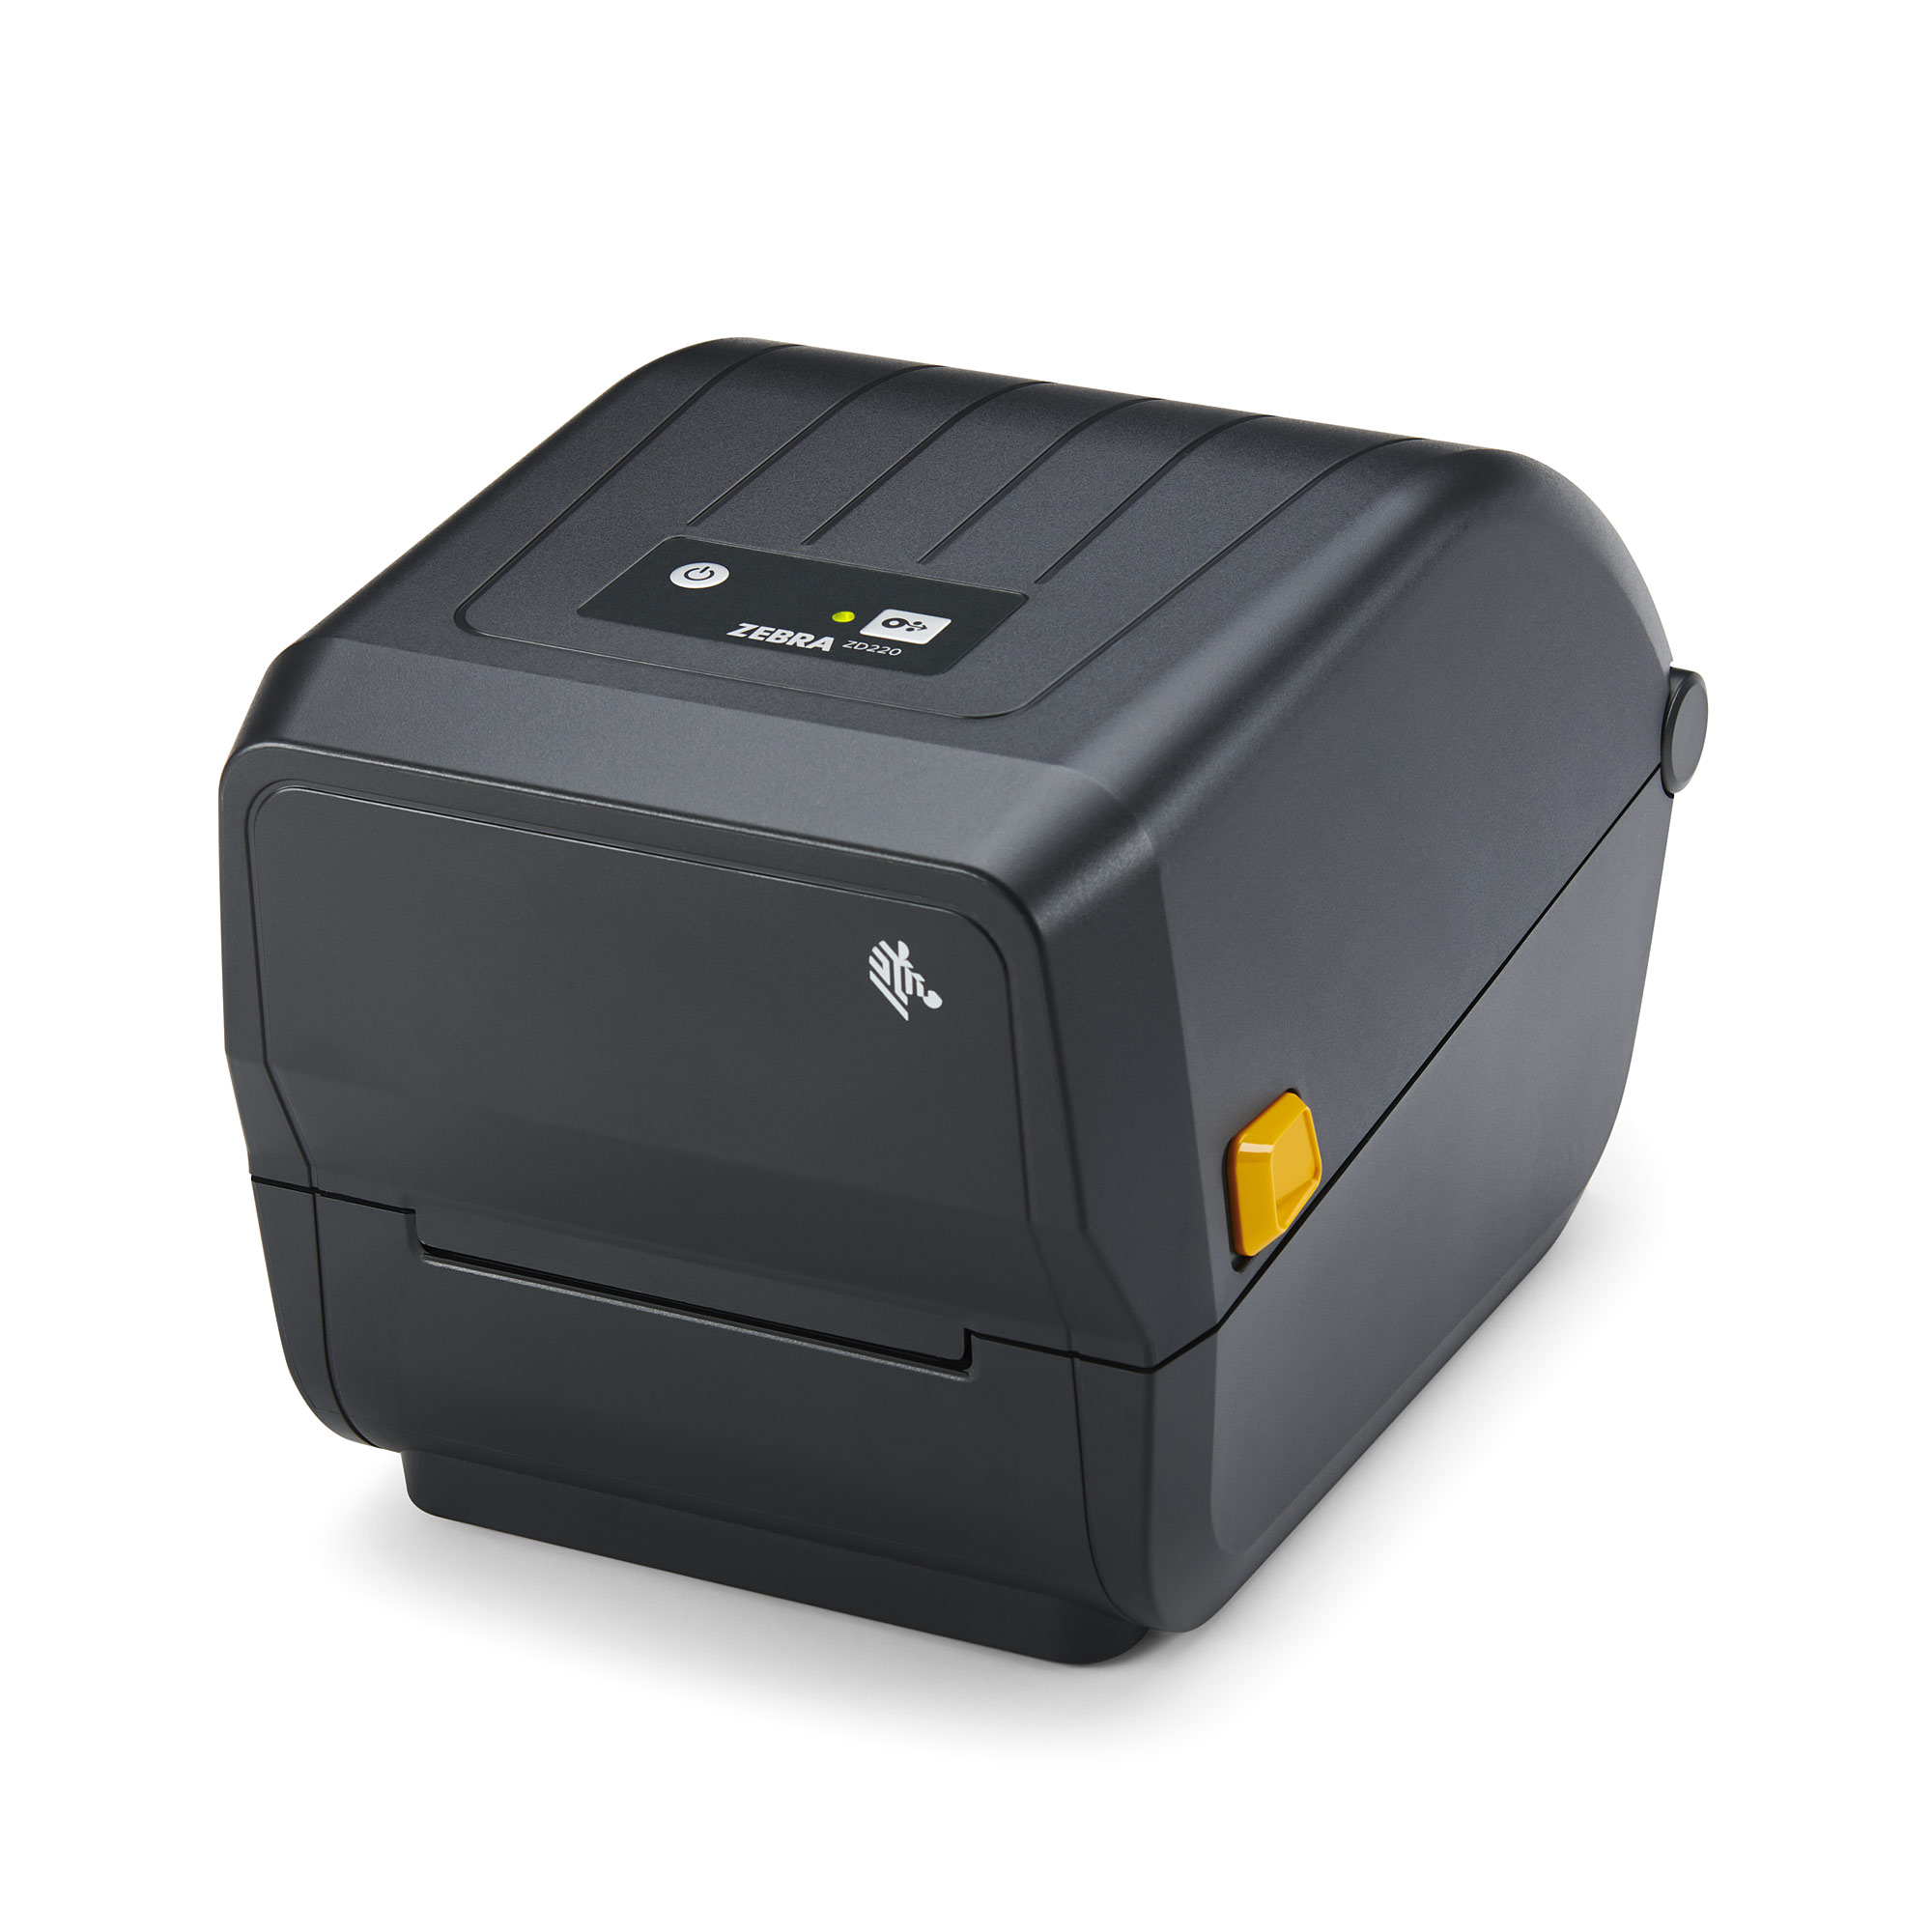 Barkod Printer Zebra ZD220